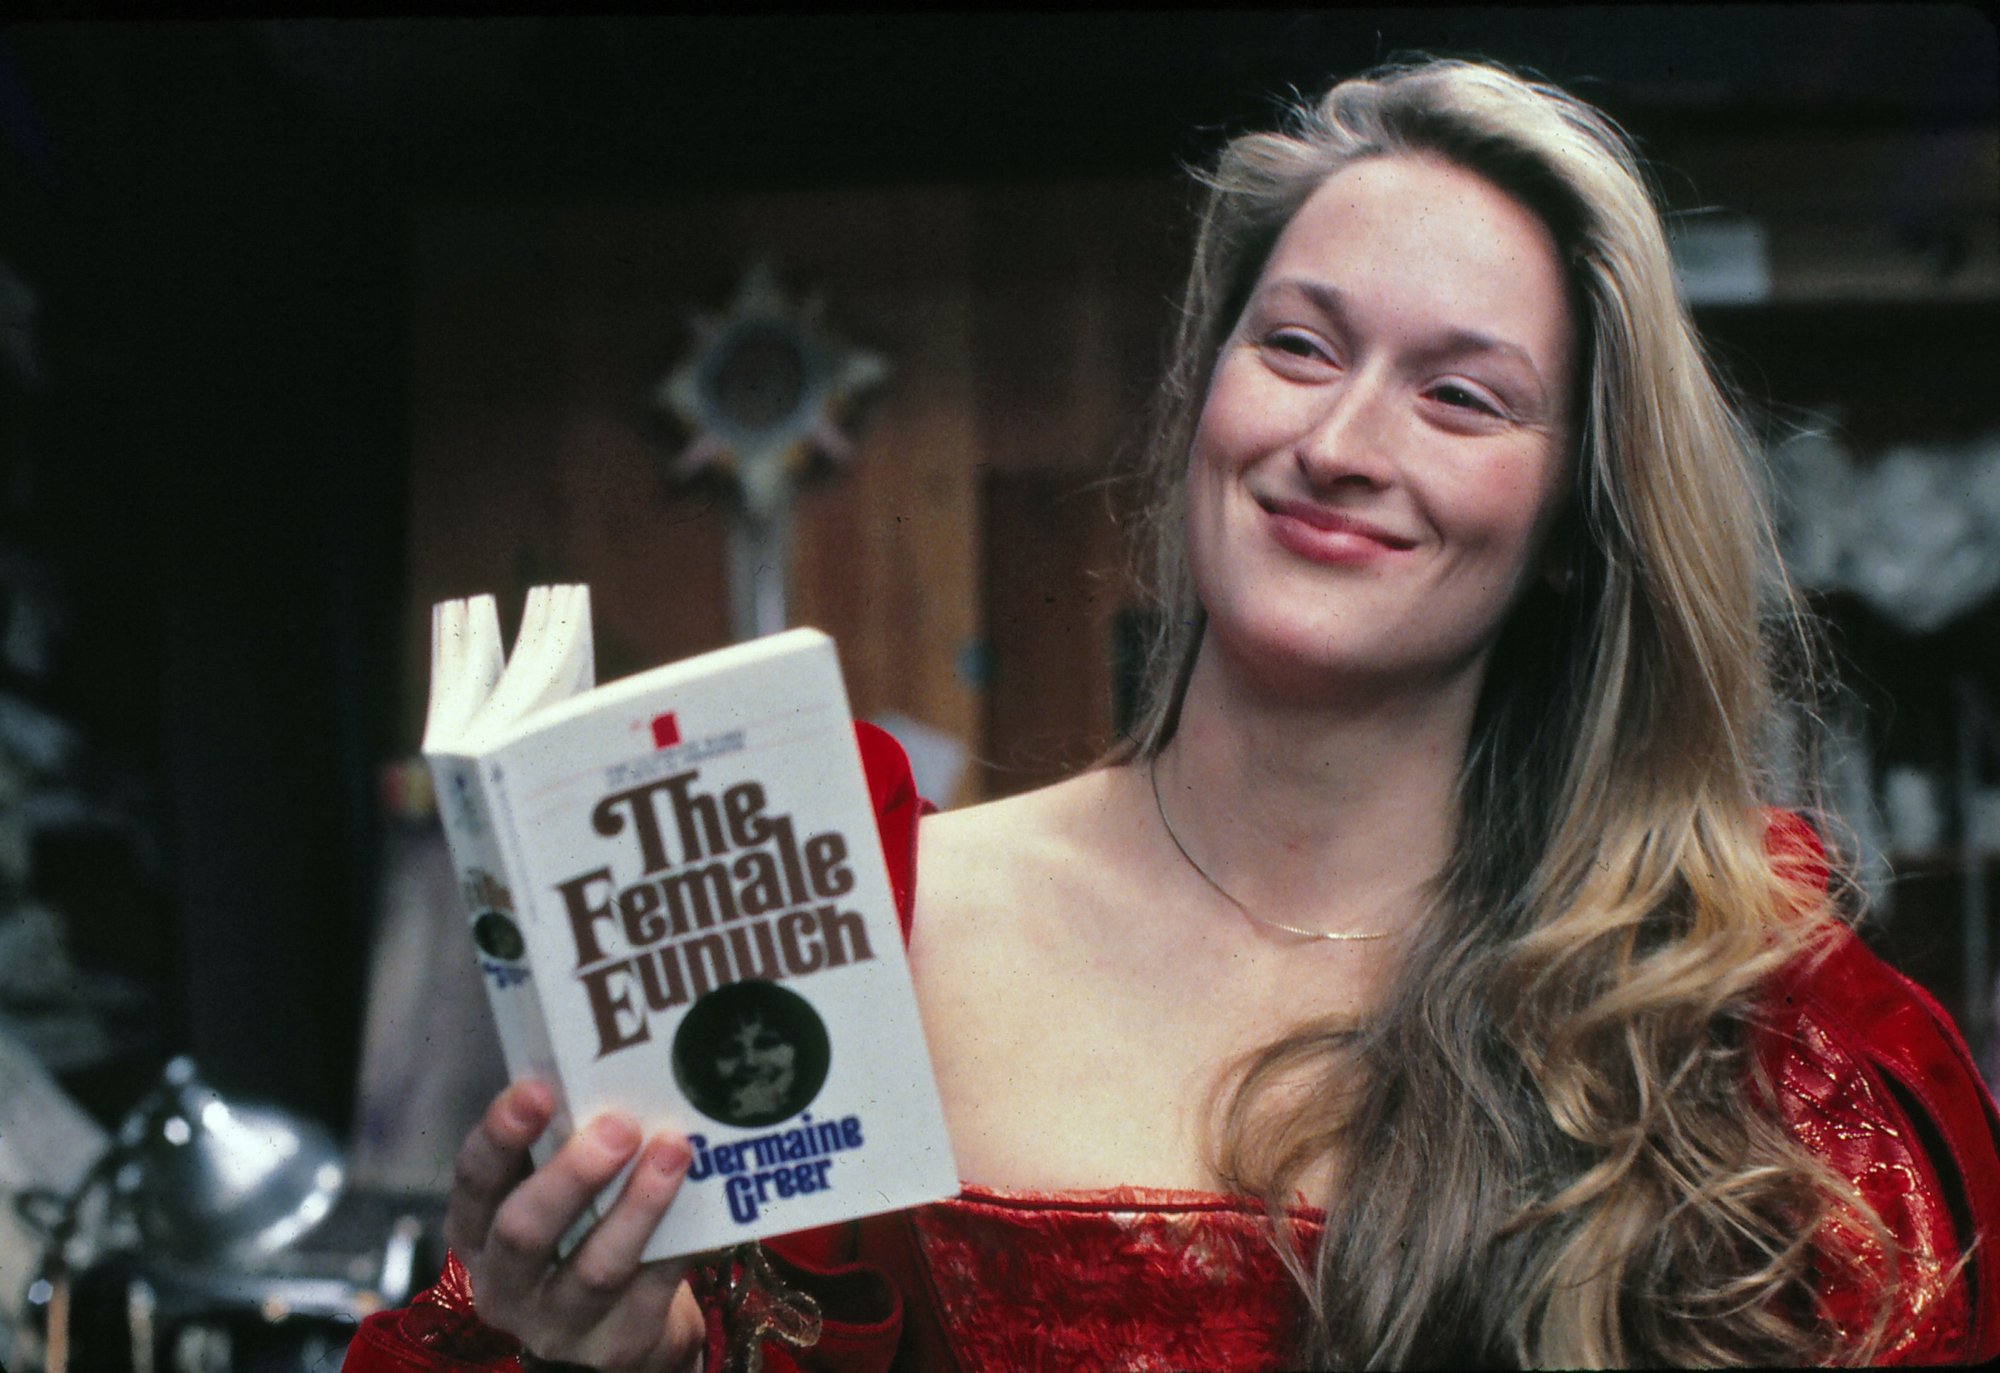 Oscar winner Meryl Streep holding a book and smiling